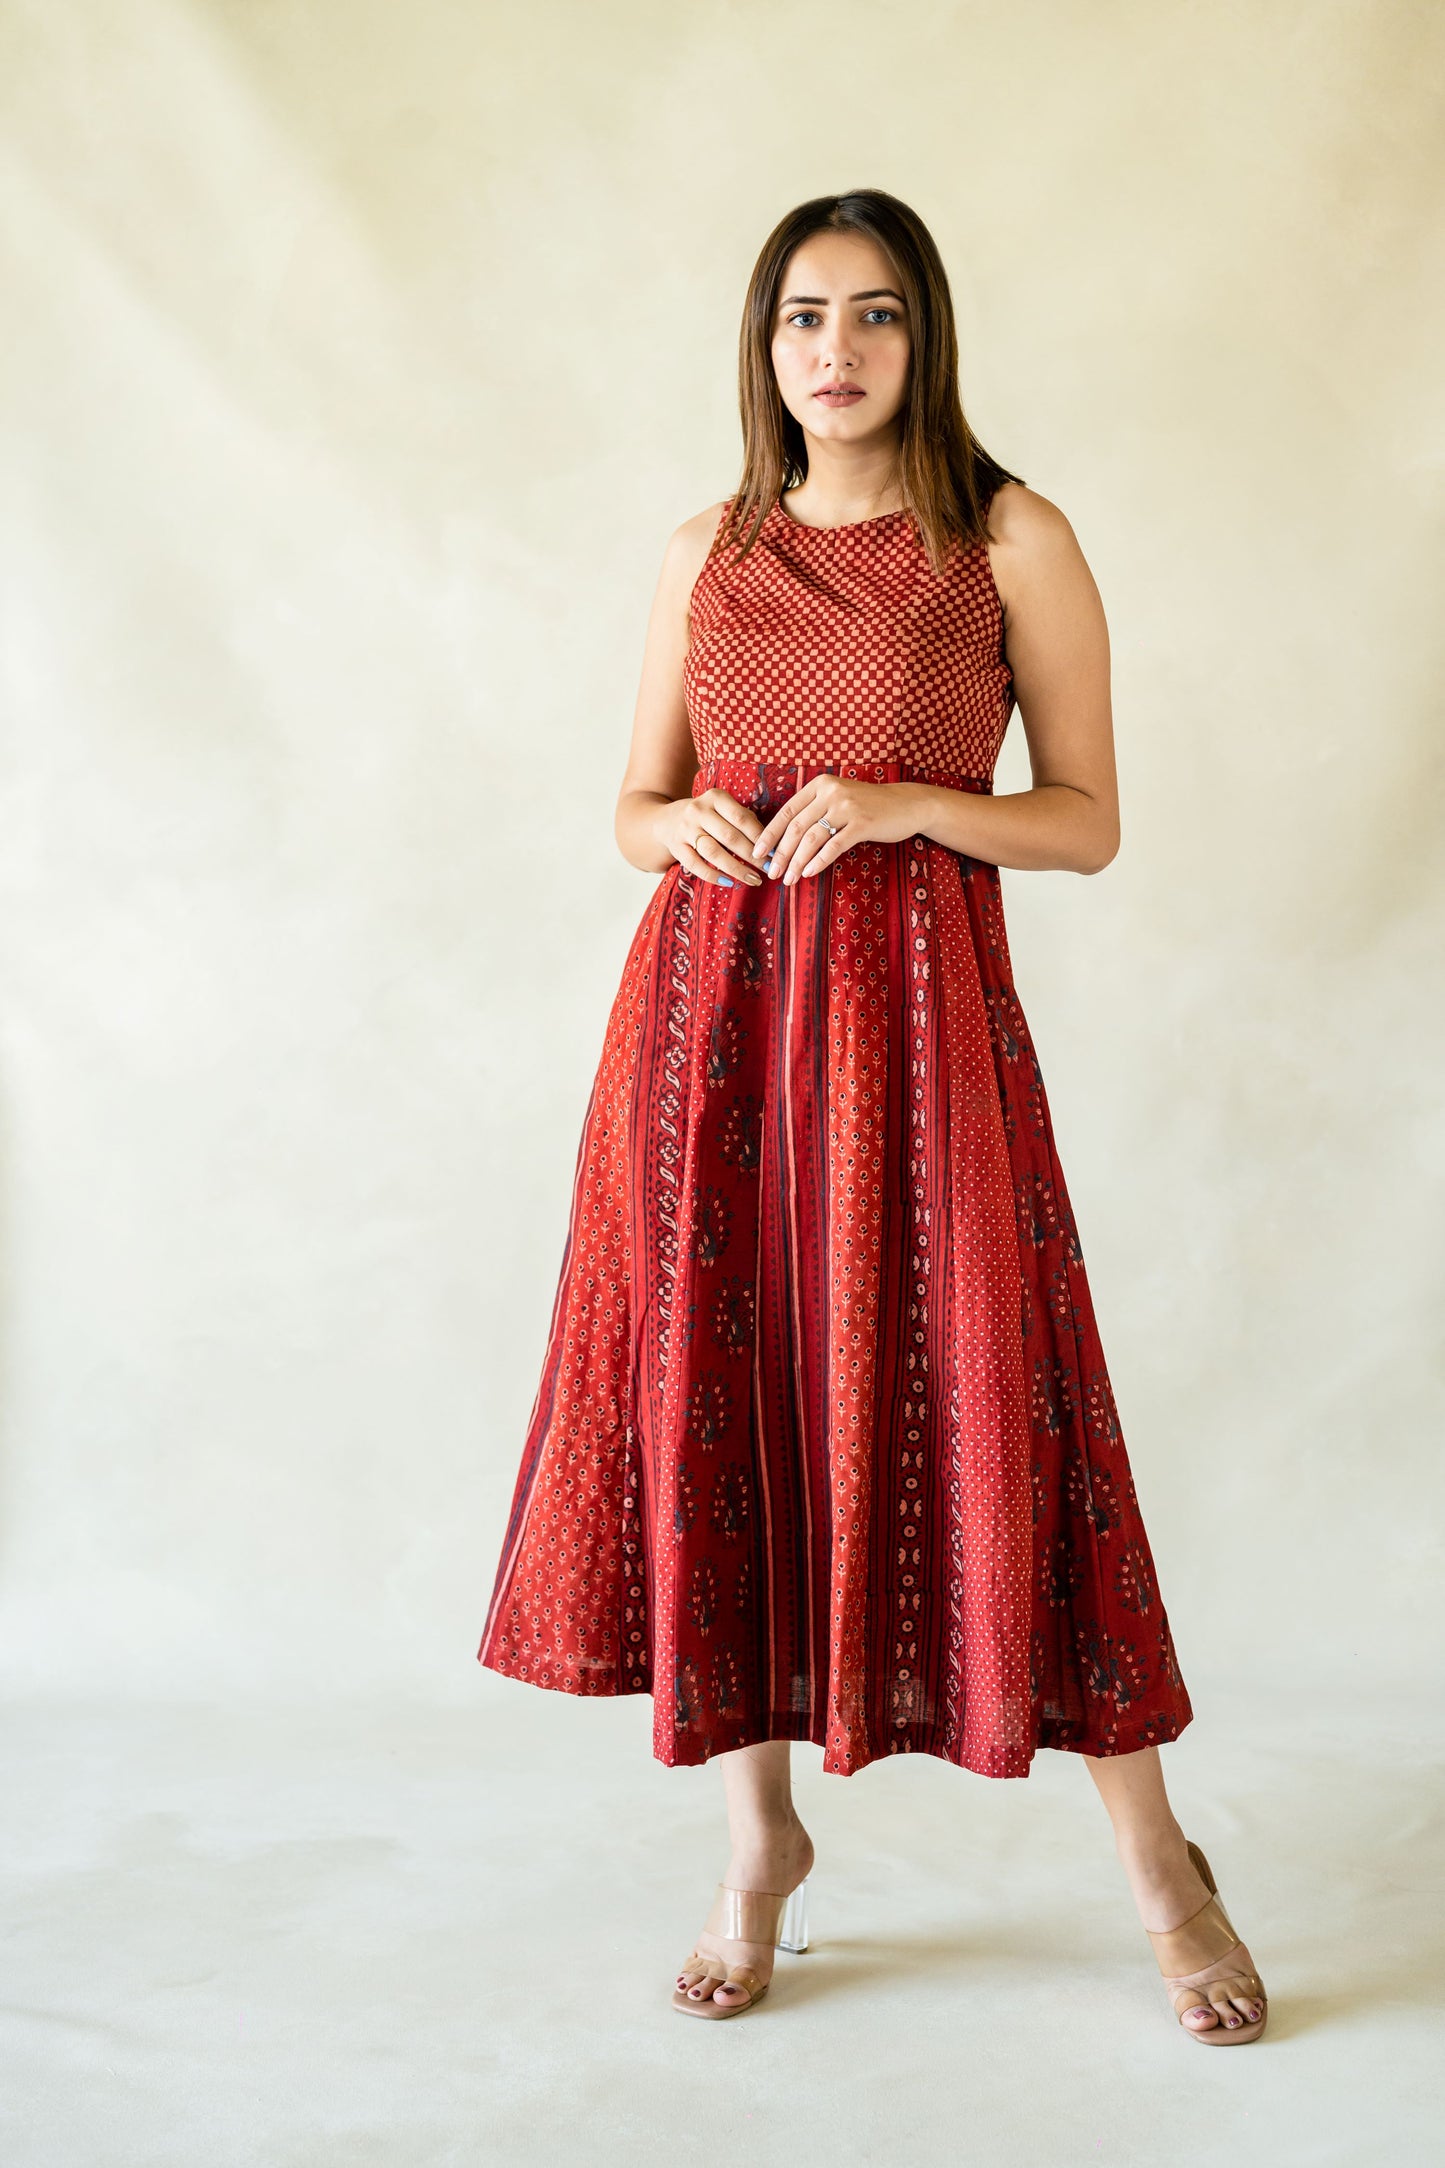 Madder red ajrakh fit and flared dress, Madder dyed fit and flared dress, Summer dress, Handmade cotton dress, Slow fashion